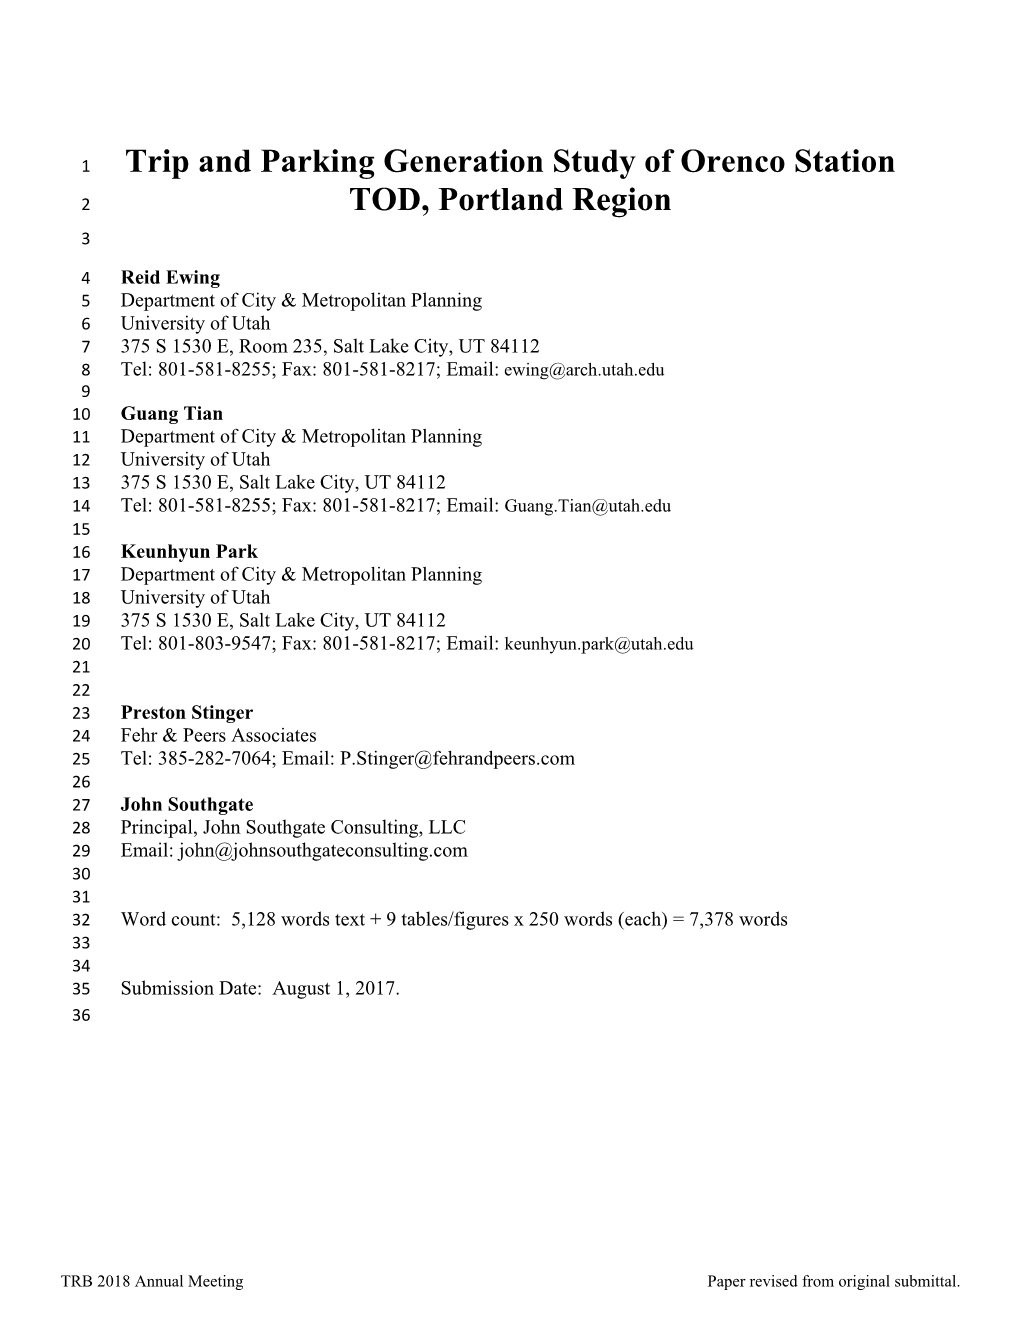 Trip and Parking Generation Study of Orenco Station TOD, Portland Region